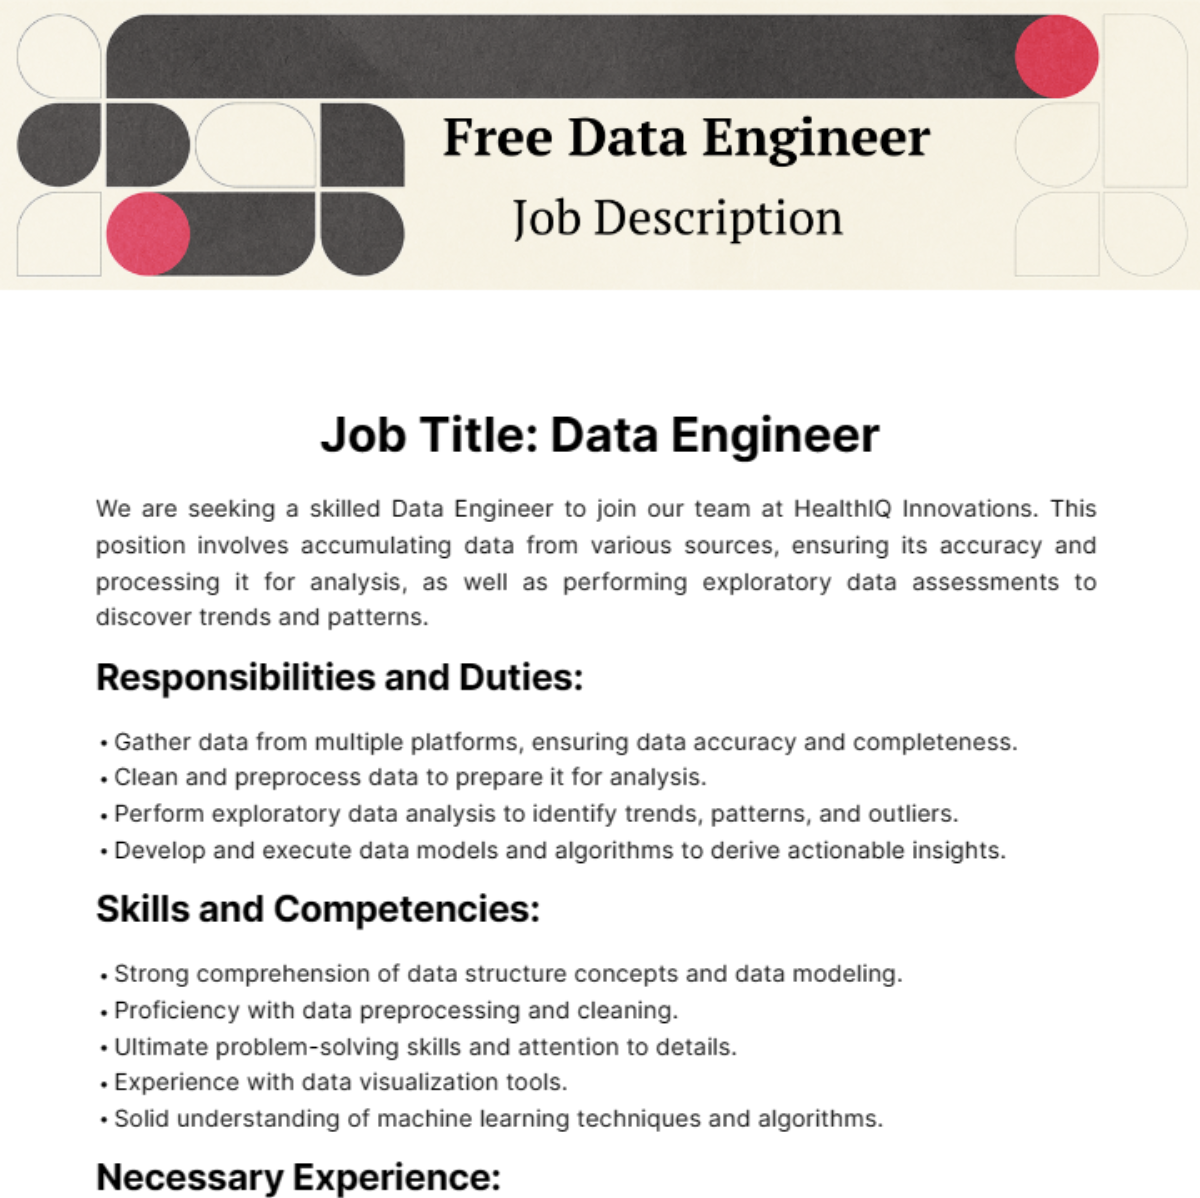 Free Data Engineer Job Description Template